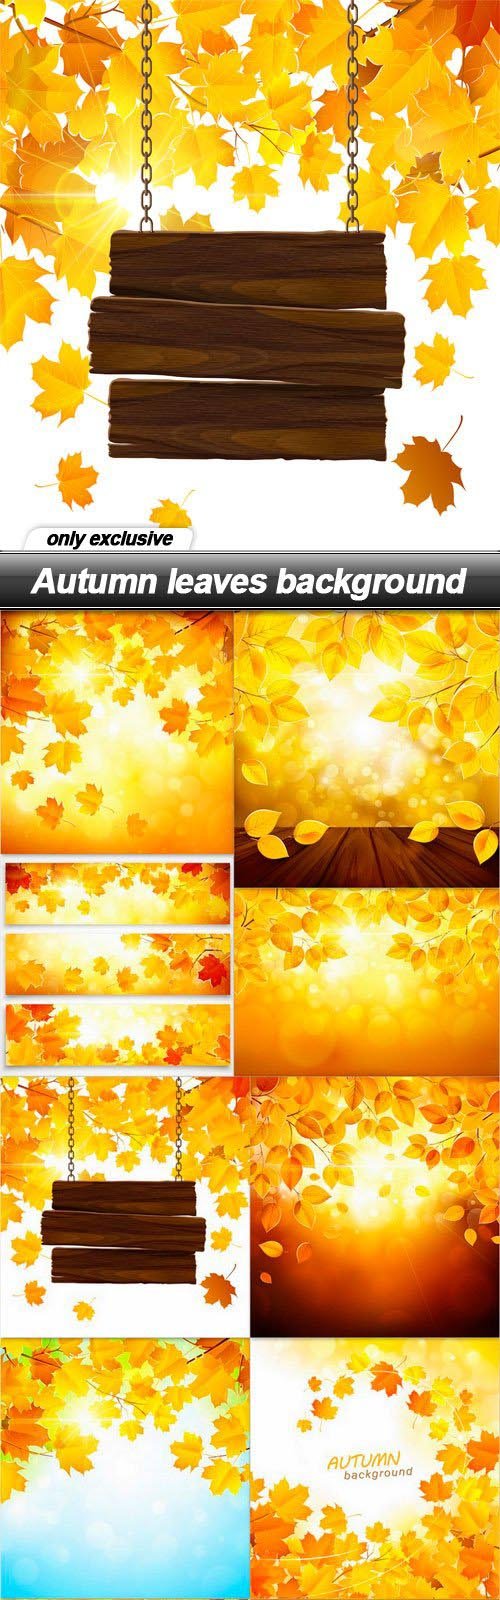 Autumn leaves background 2 - 10 EPS